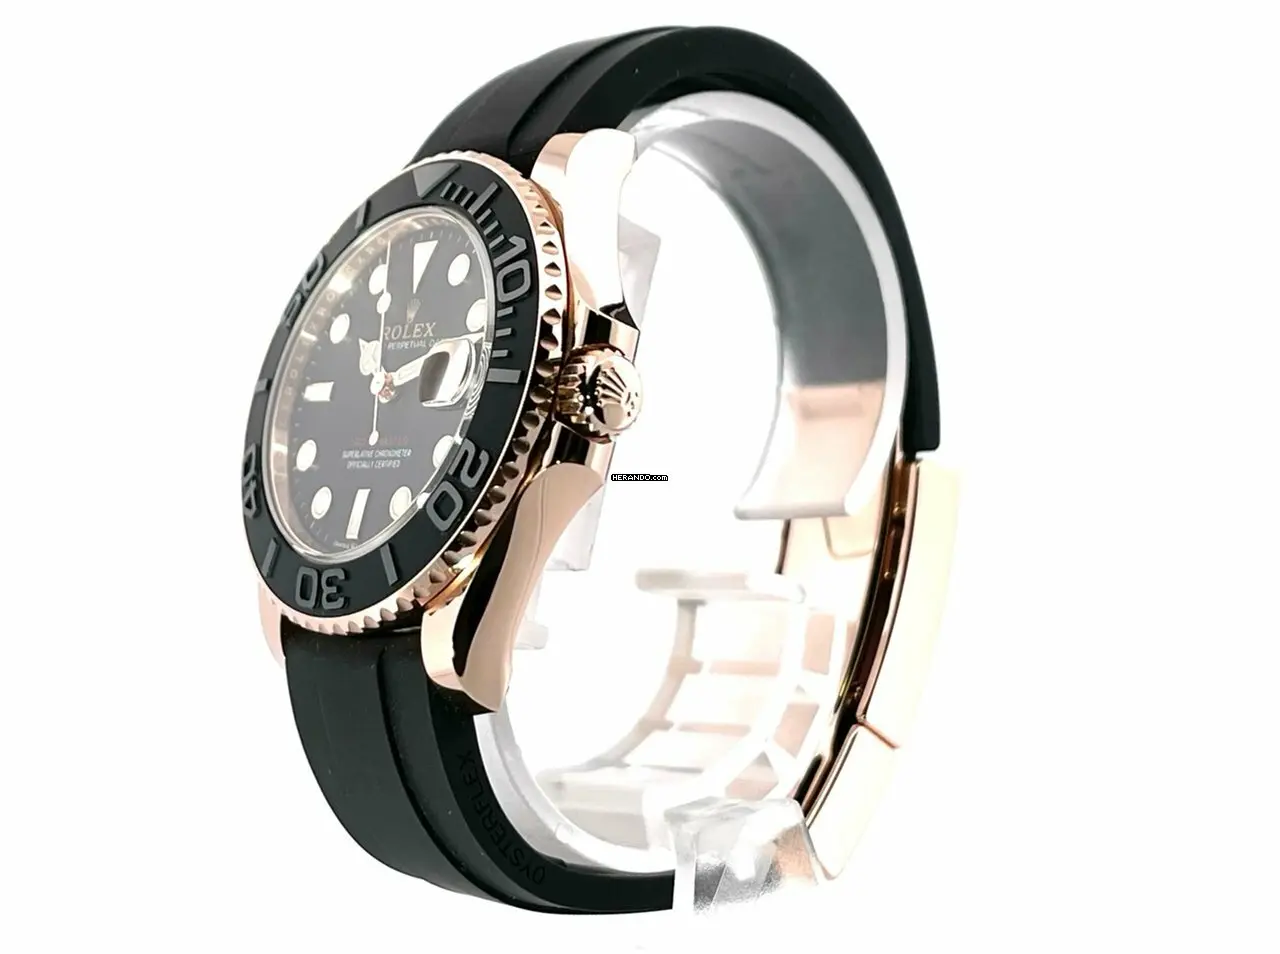 watches-37525-4139988-l4yfpf0600b0xxpfps04hmwi-ExtraLarge.webp